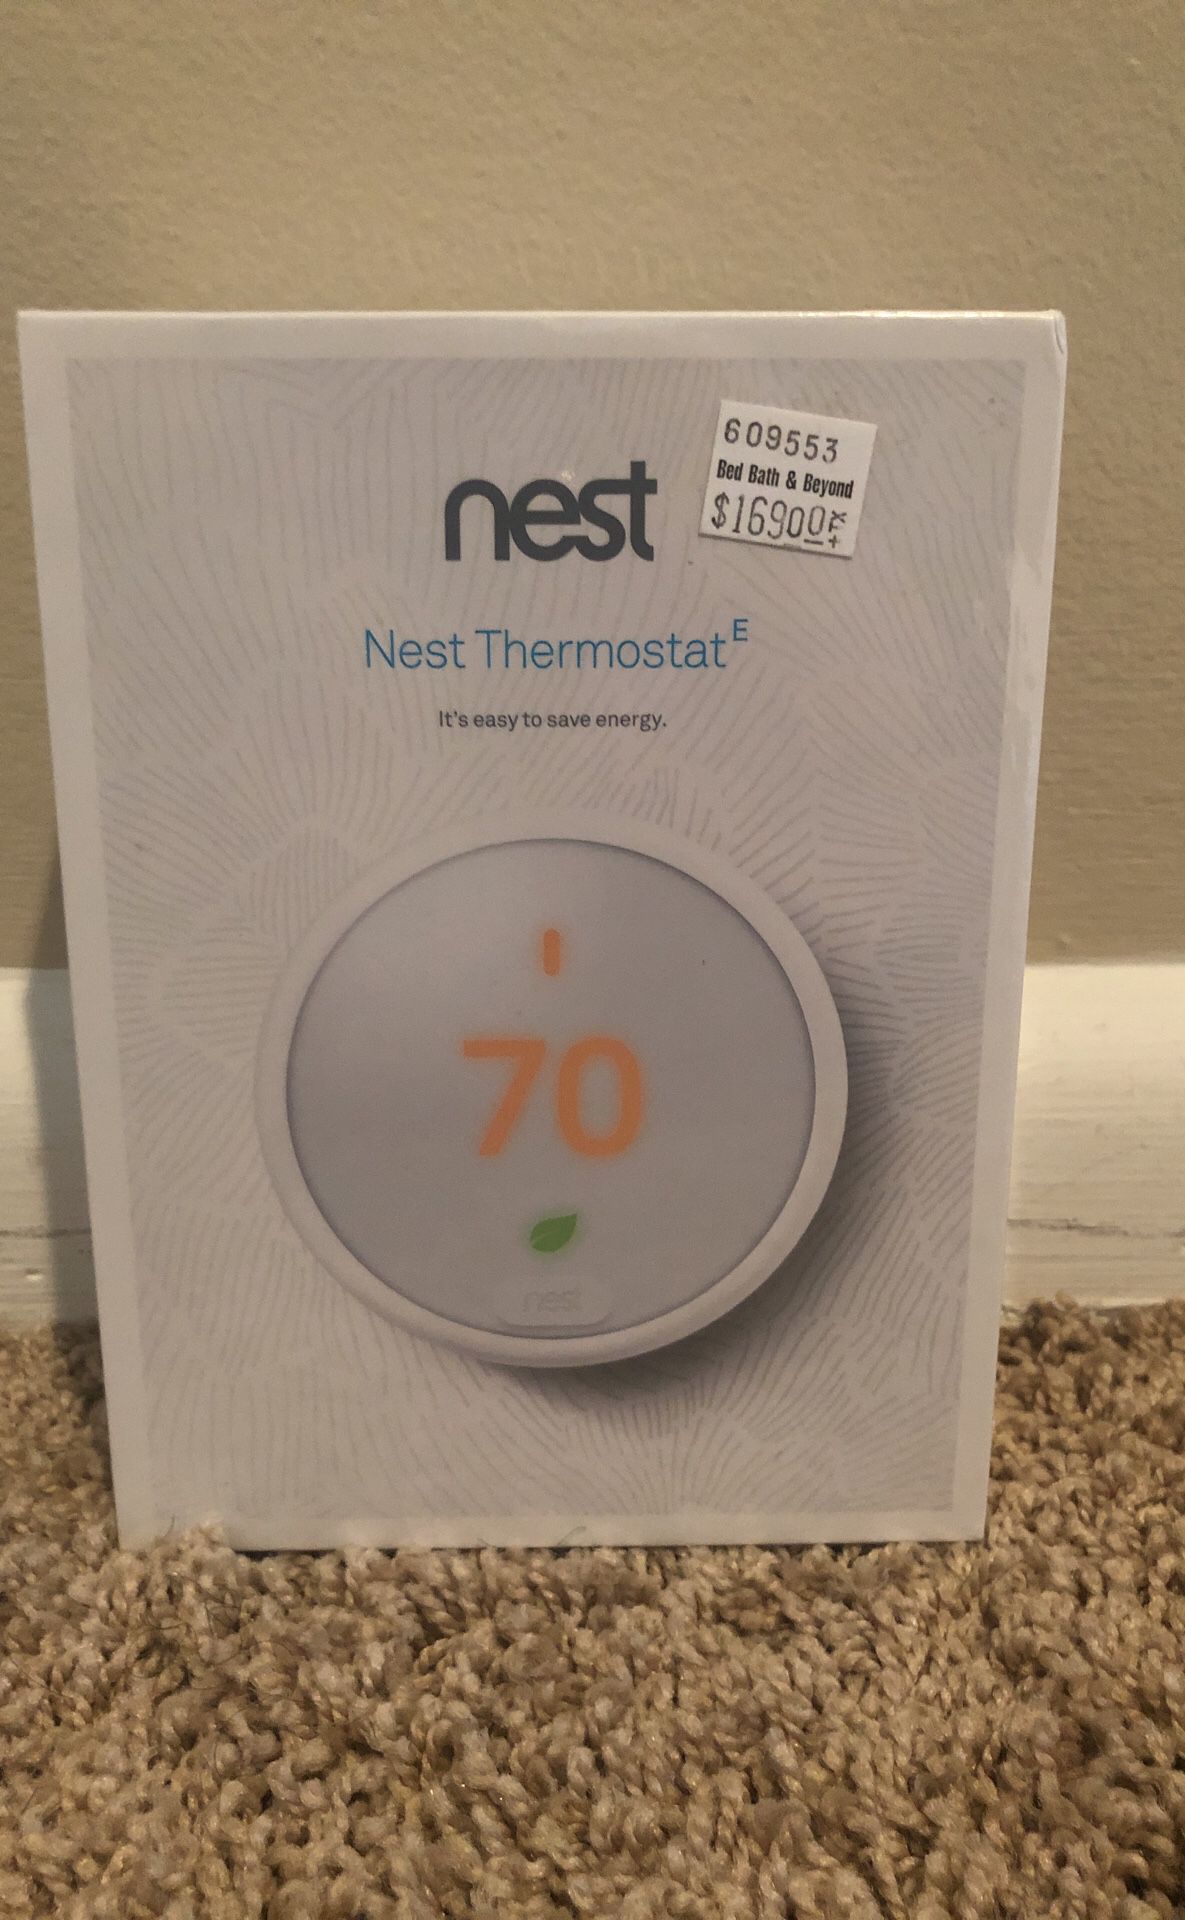 Brand new nest thermostat E